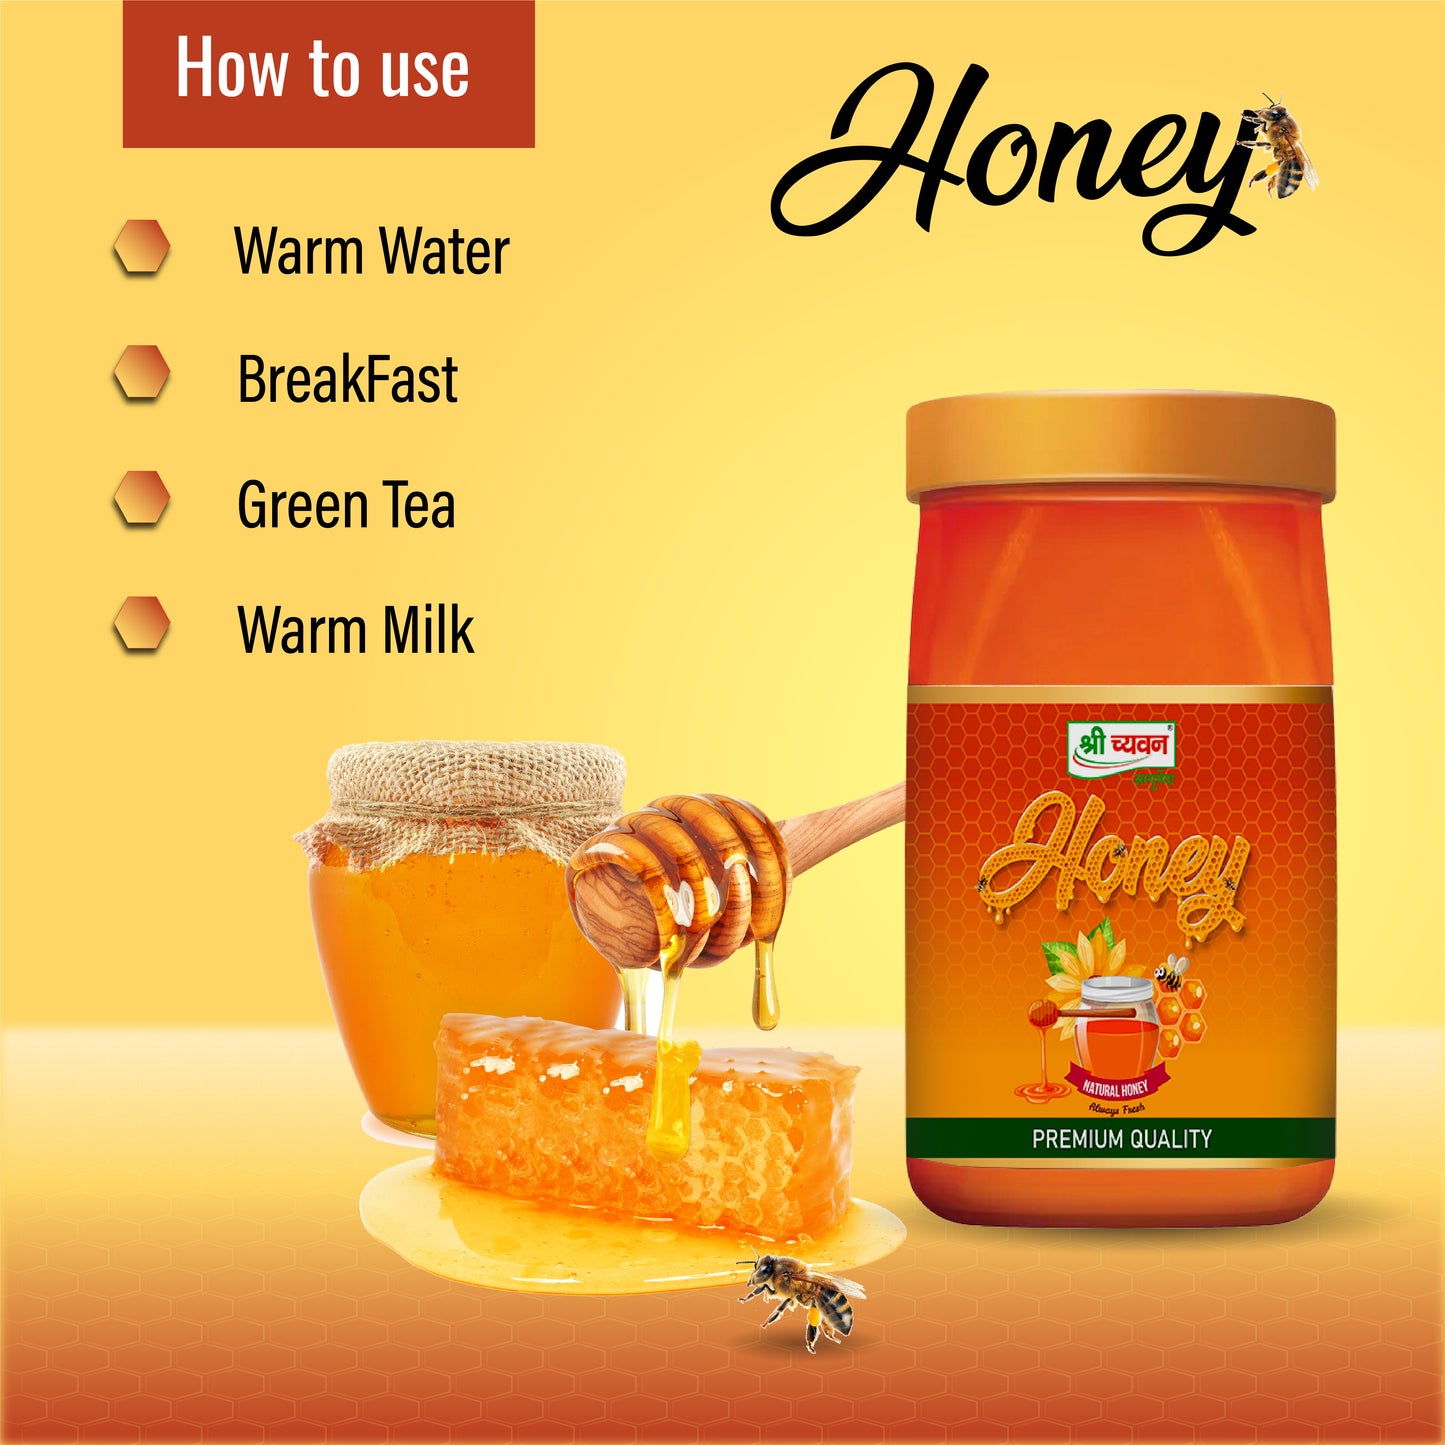 Honey Uses